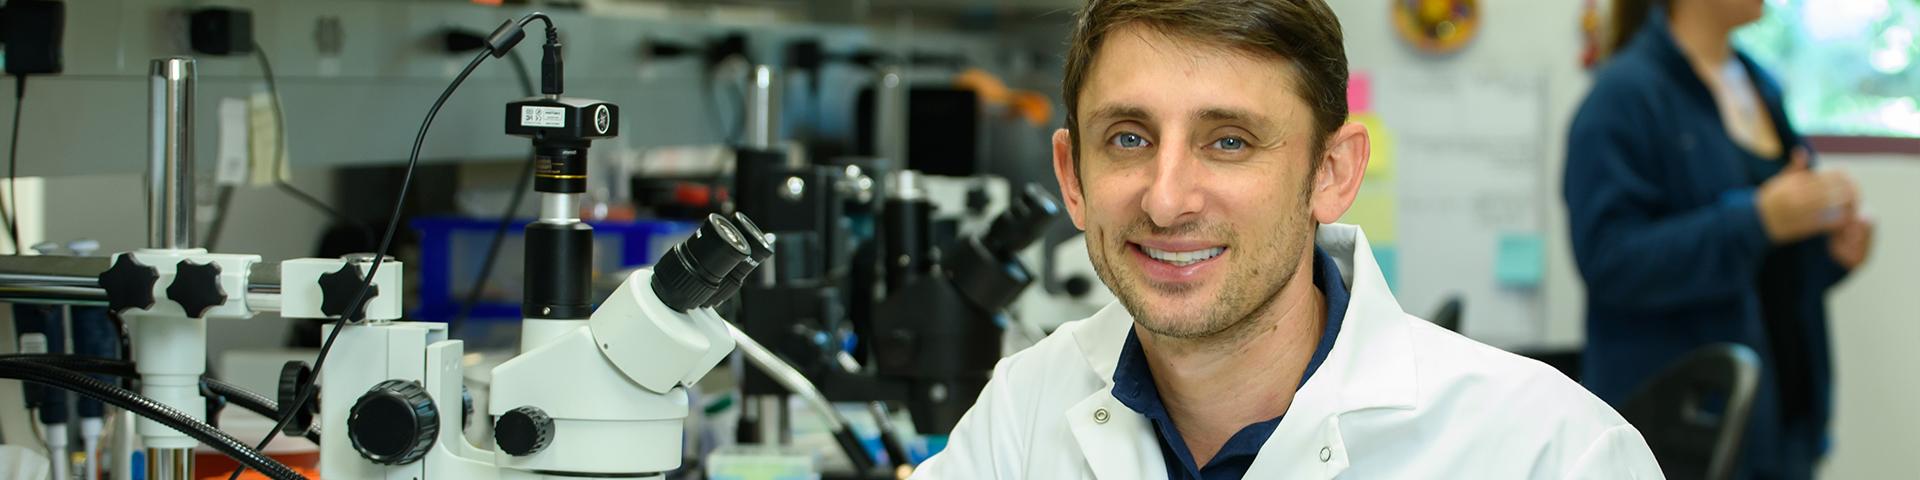 Professor in lab coat smiling at camera